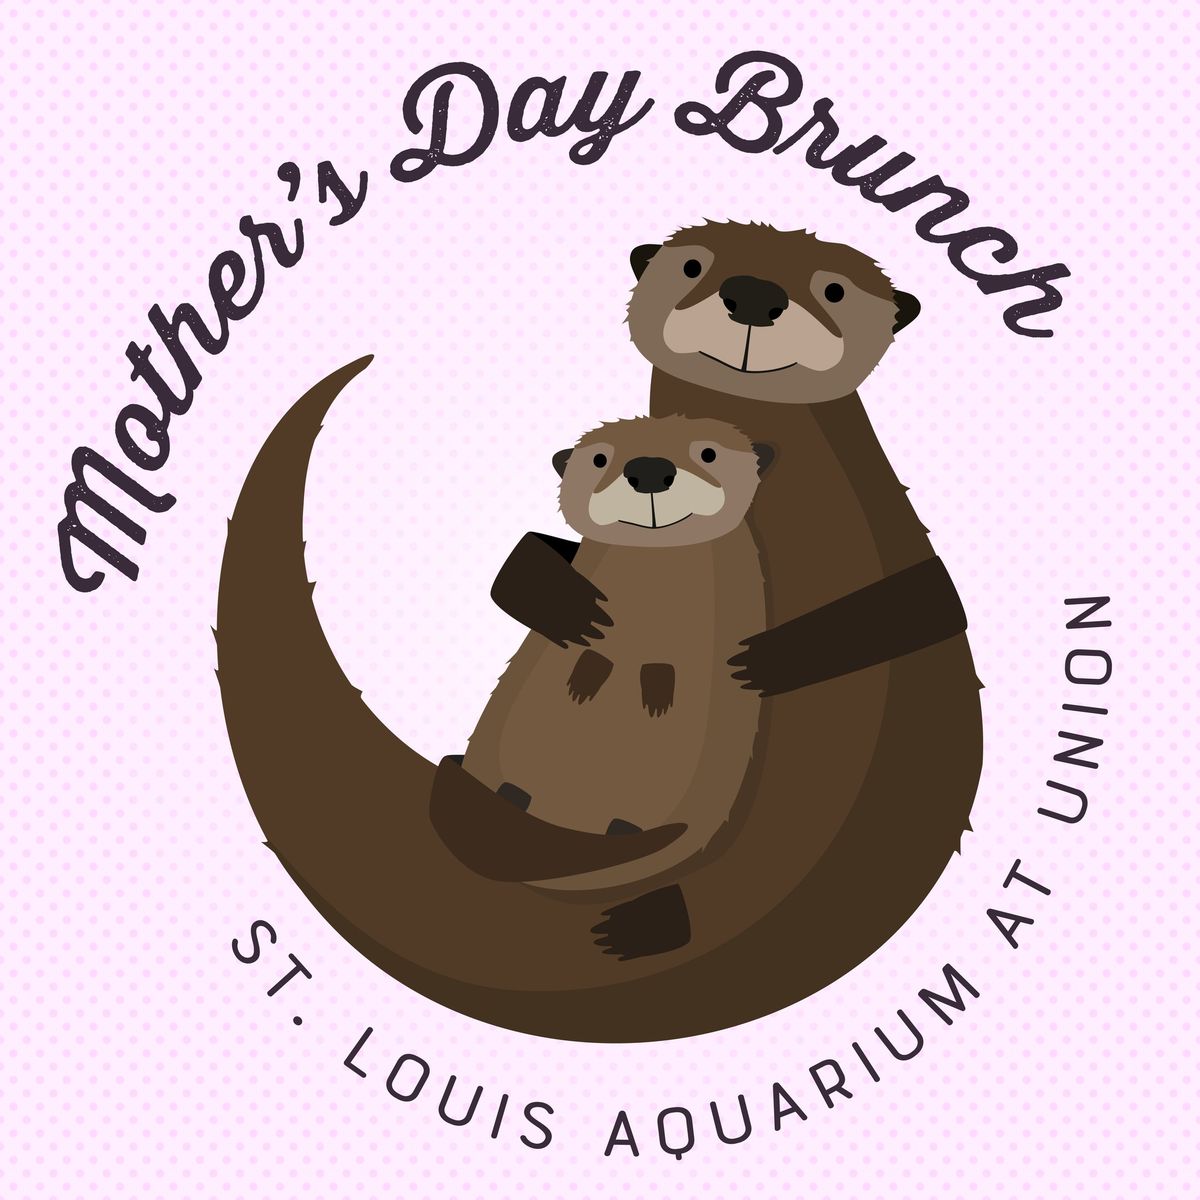 Mother's Day Brunch at the St. Louis Aquarium